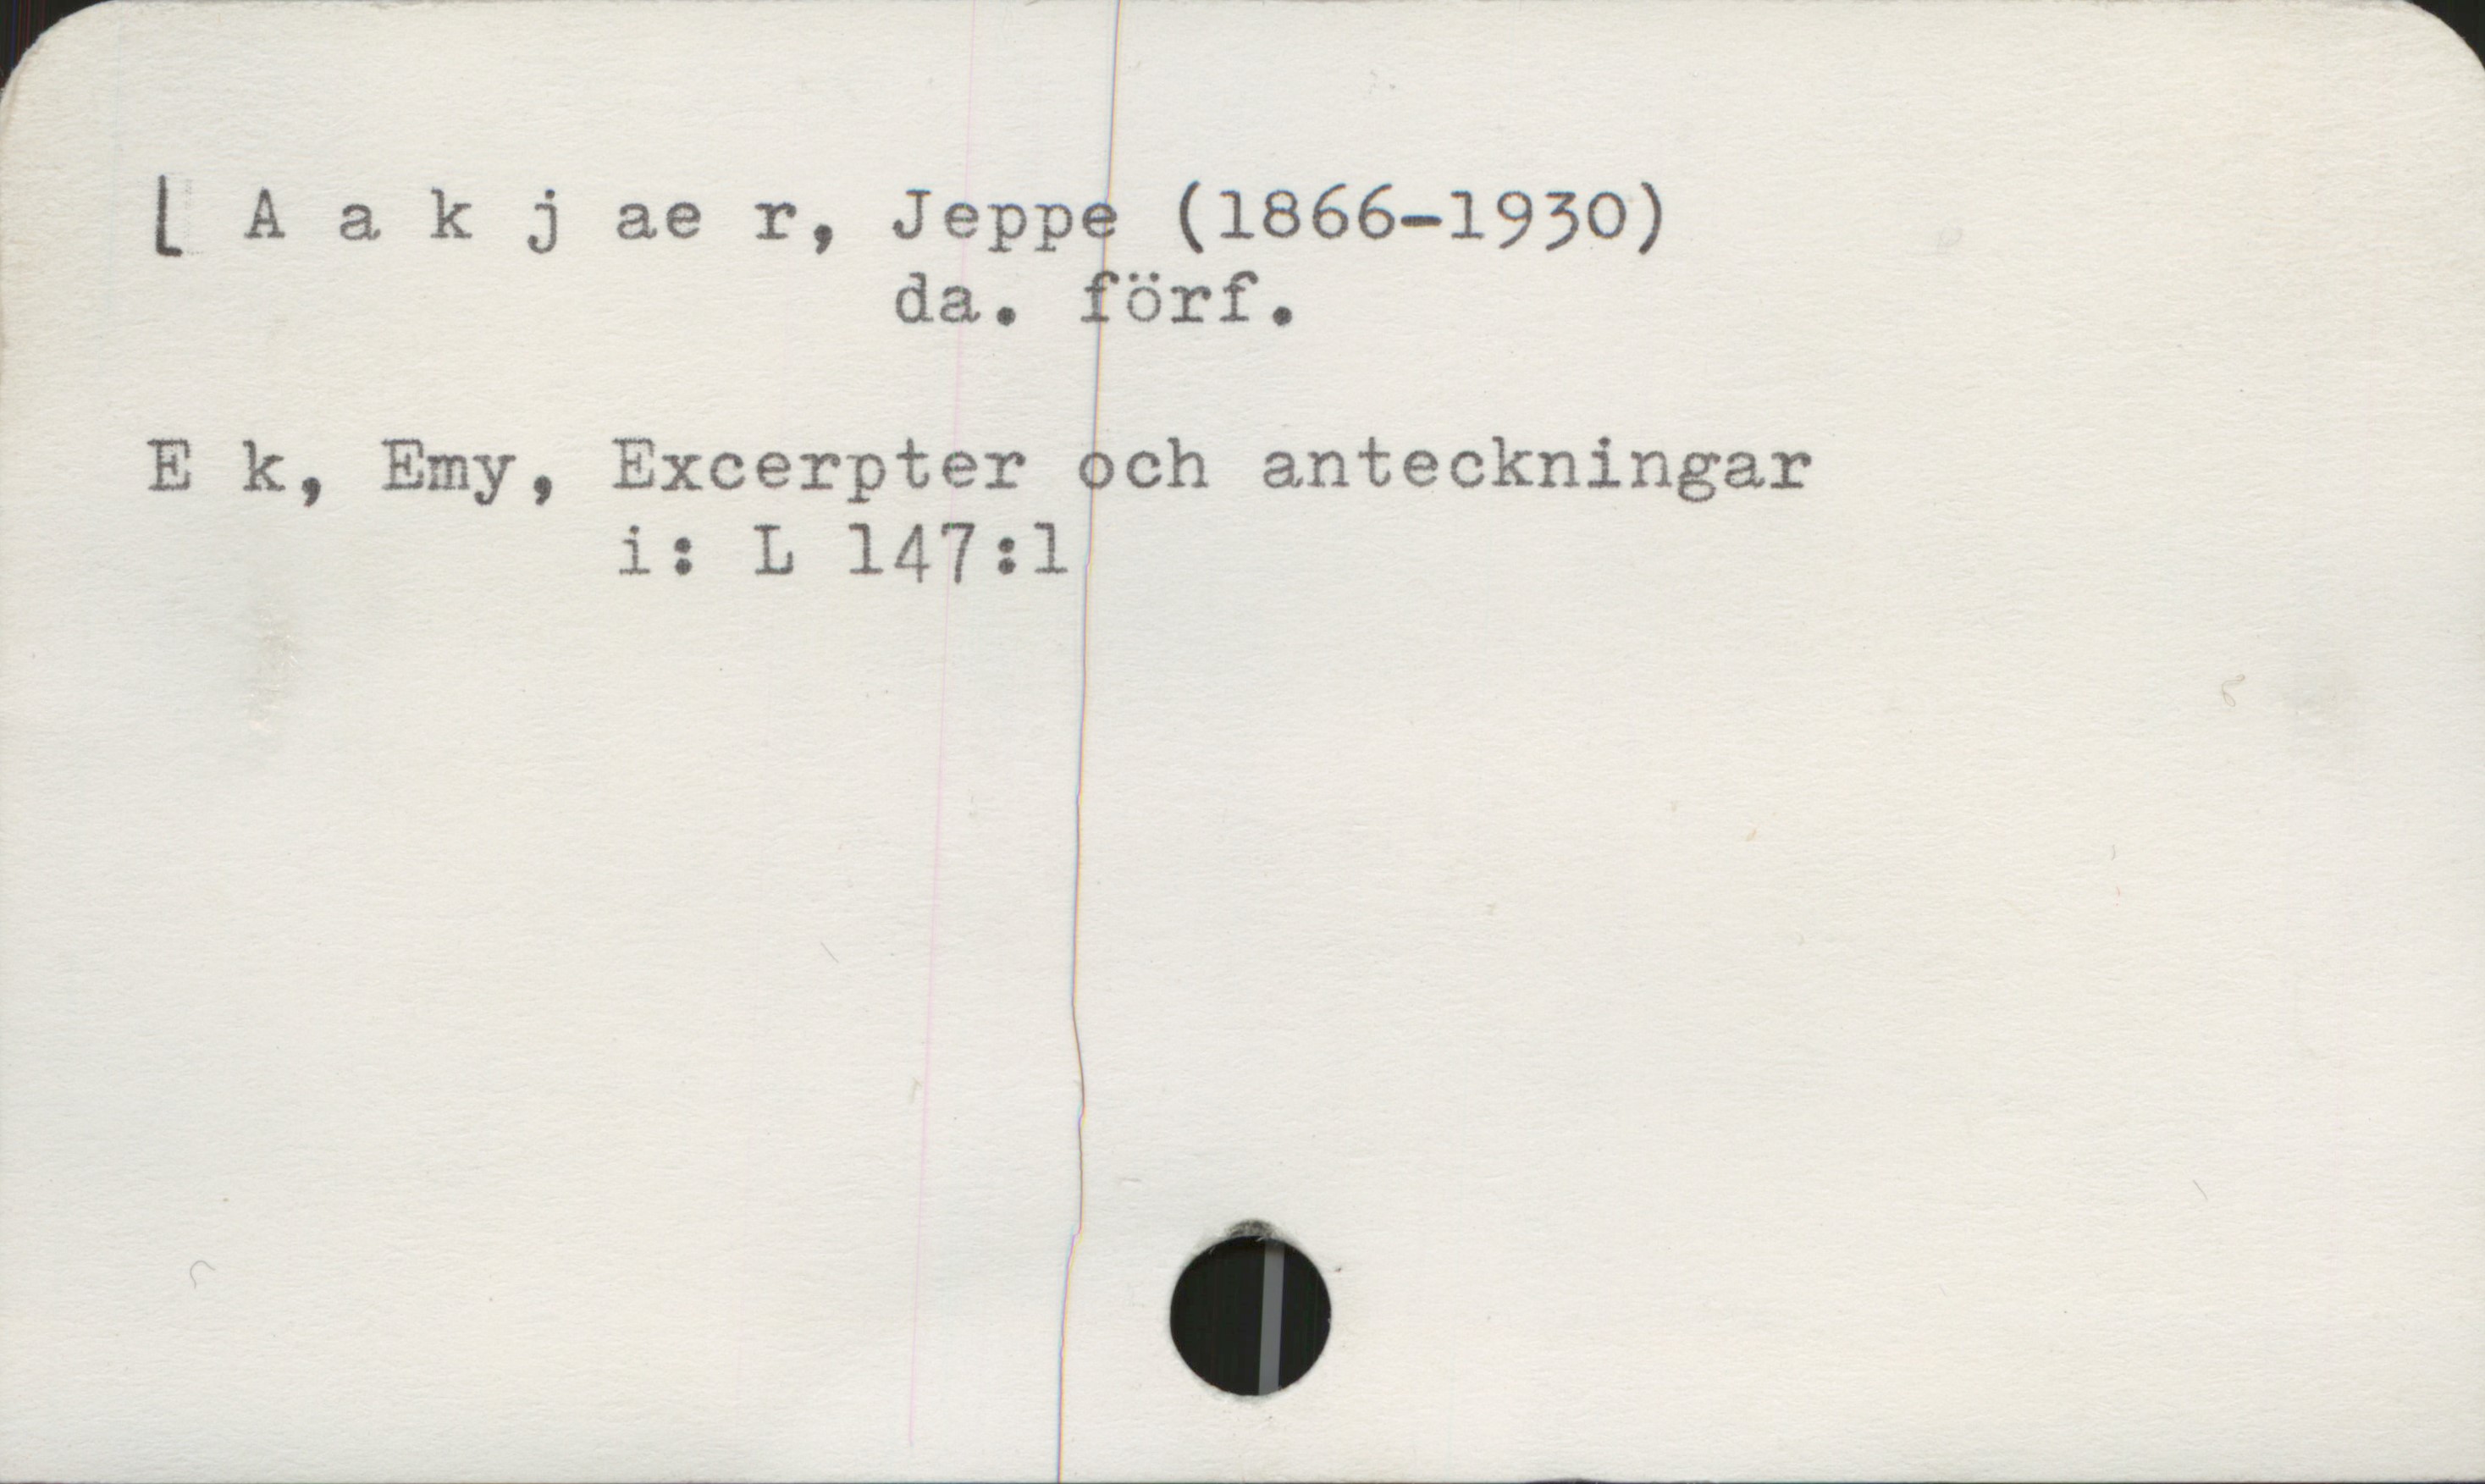 Aakjaer, Jeppe (1866-1930) Aakjaer, Jeppe (1866-1930)
da. förf.
Ek, Emy, Excerpter och anteckningar
i: L 147:1